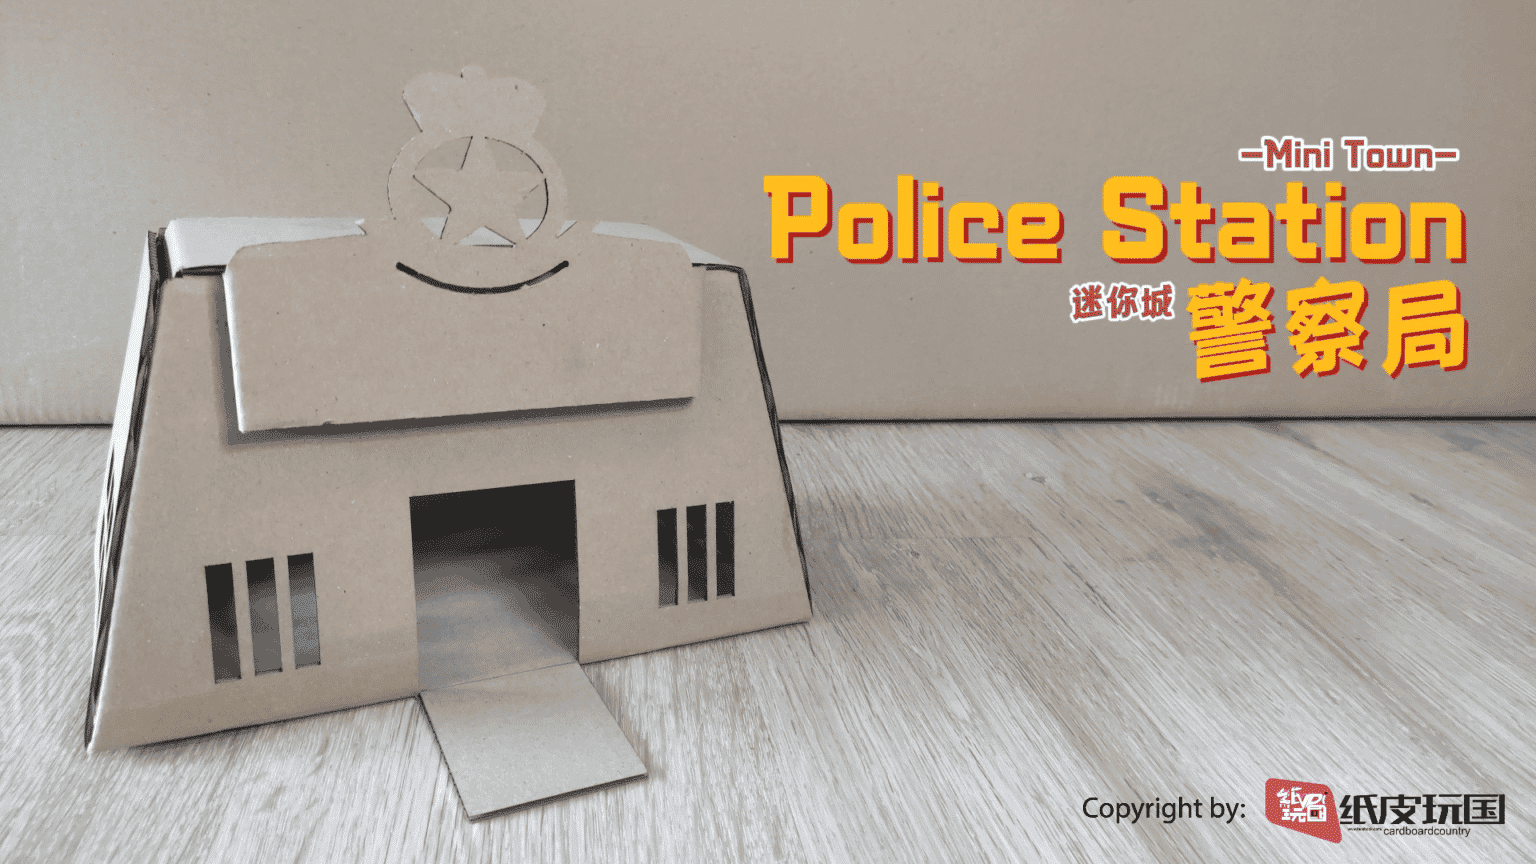 (215) Mini Town_Police Station 迷你城_警察局 - YouTube